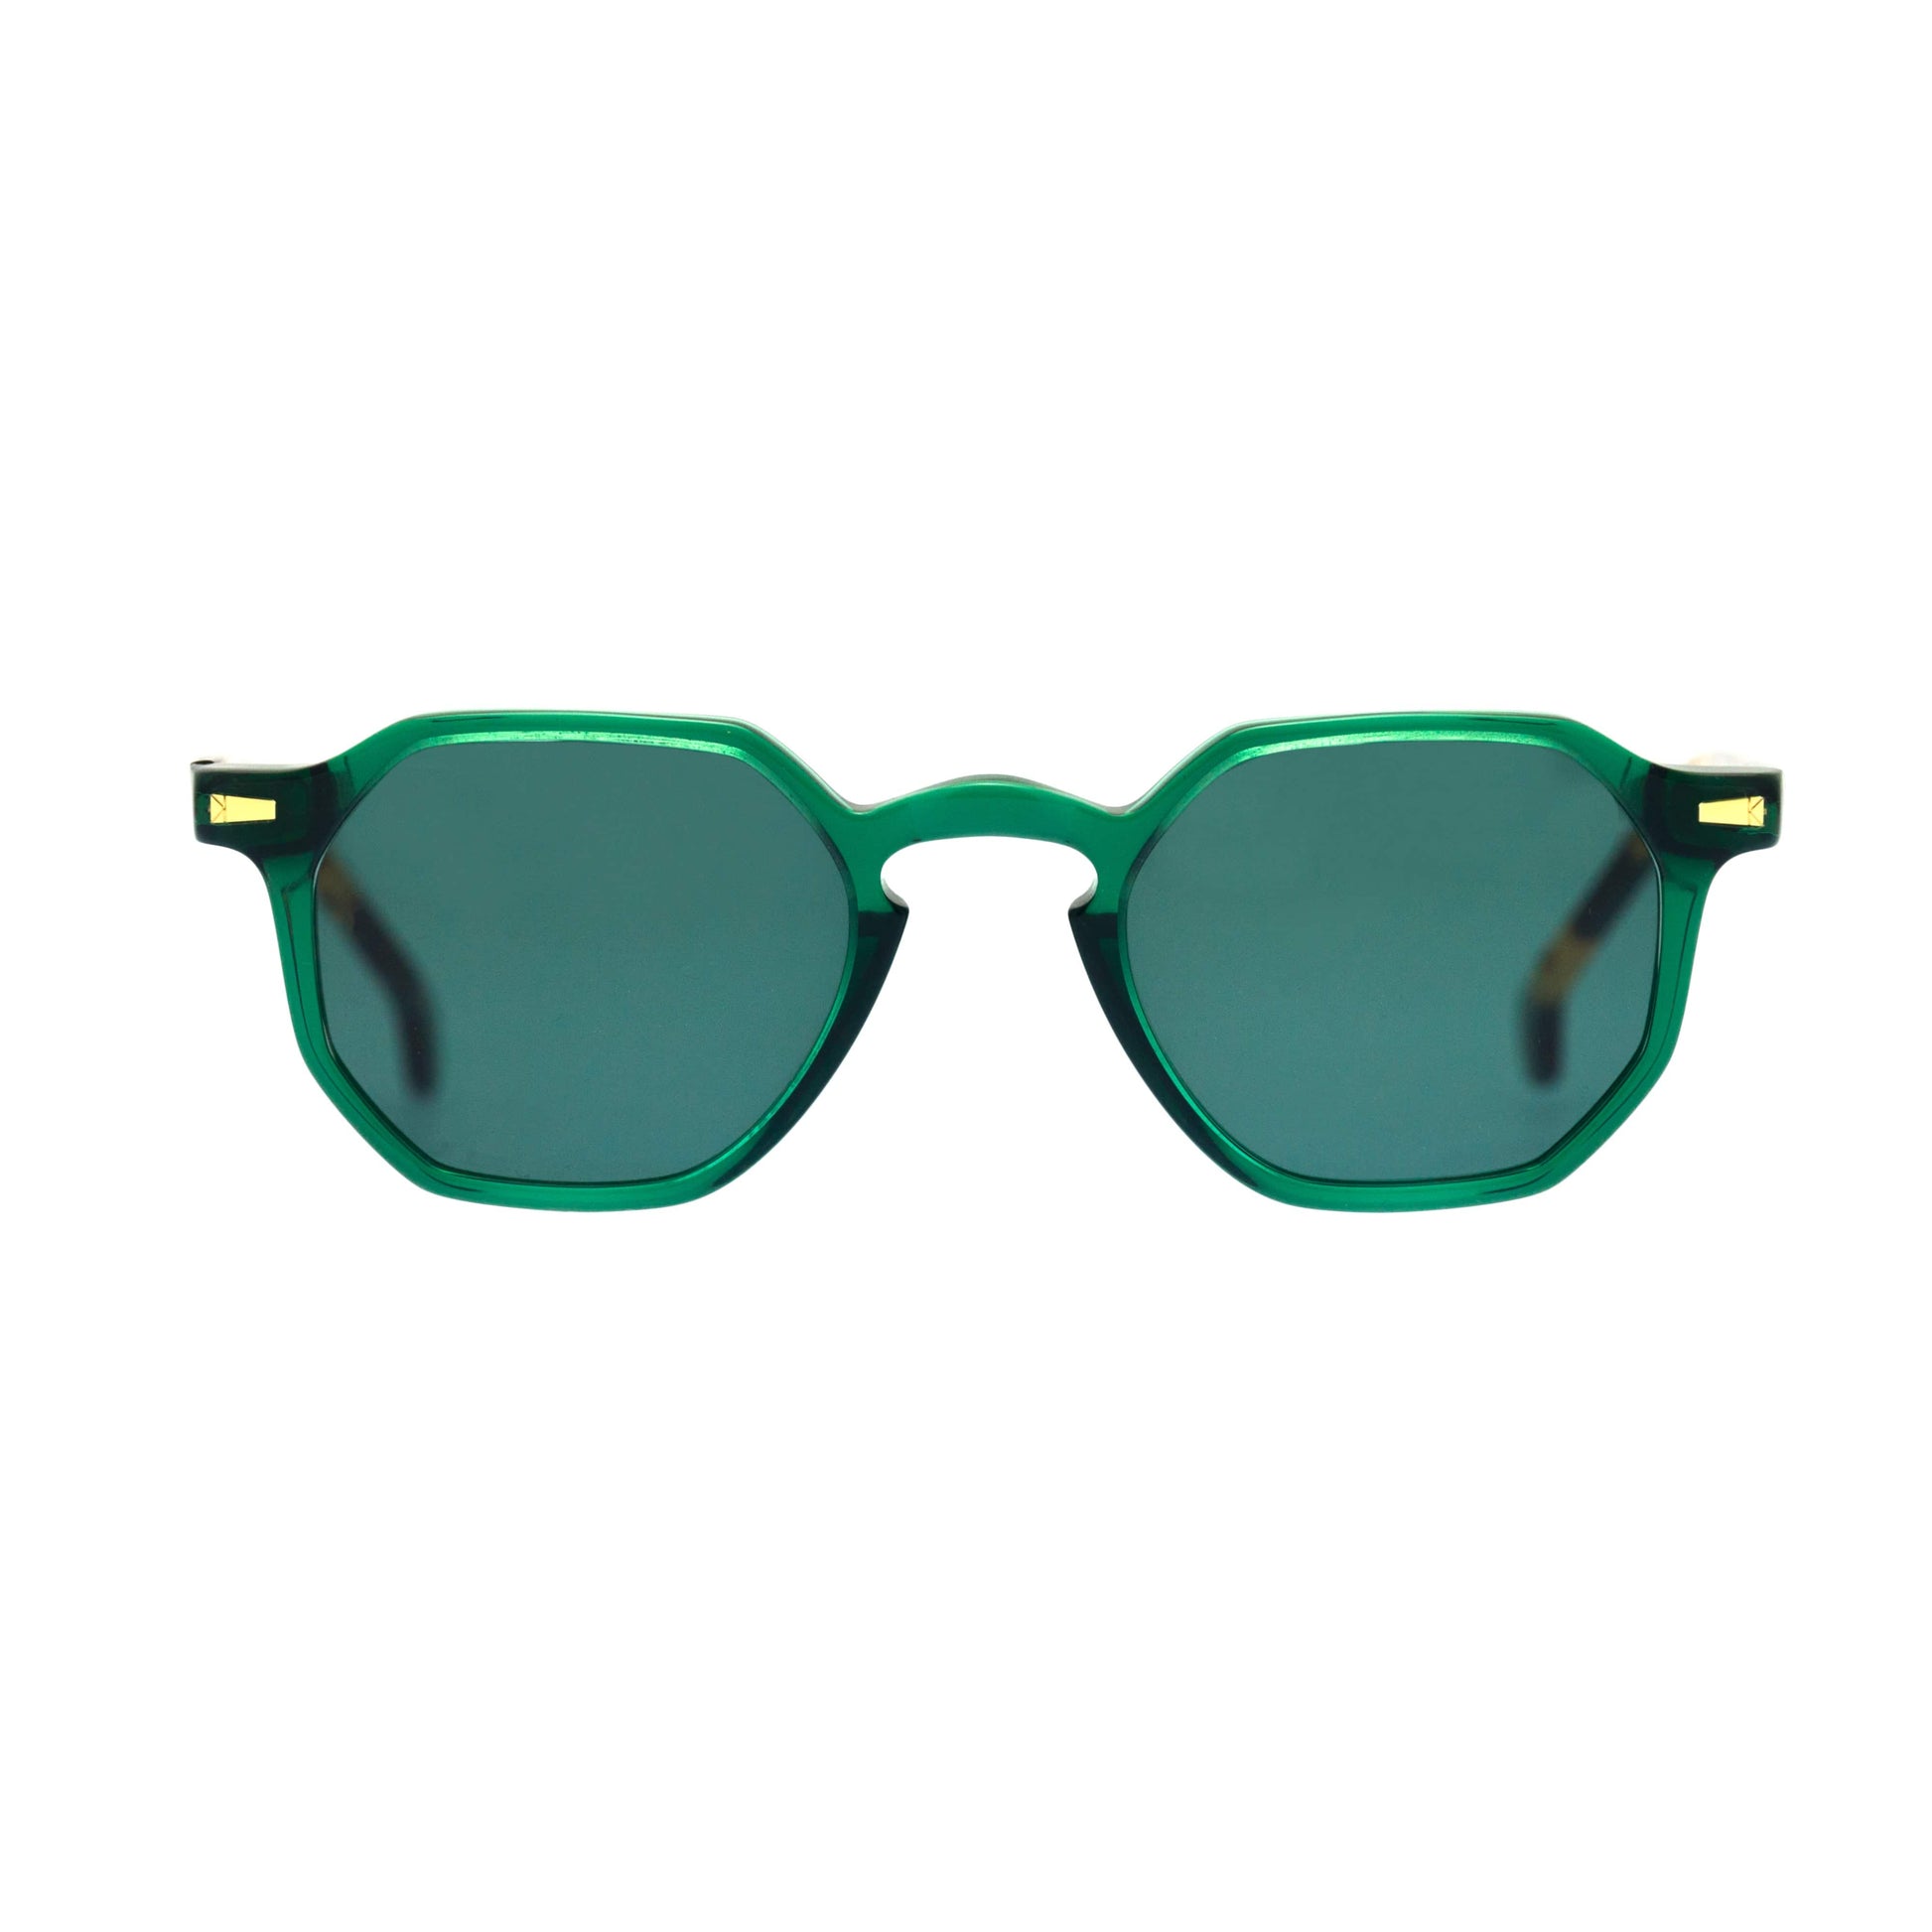 Kyme Occhiali da sole Verde trasparente - verde Kyme Alain: occhiale da sole pantos made in Italy